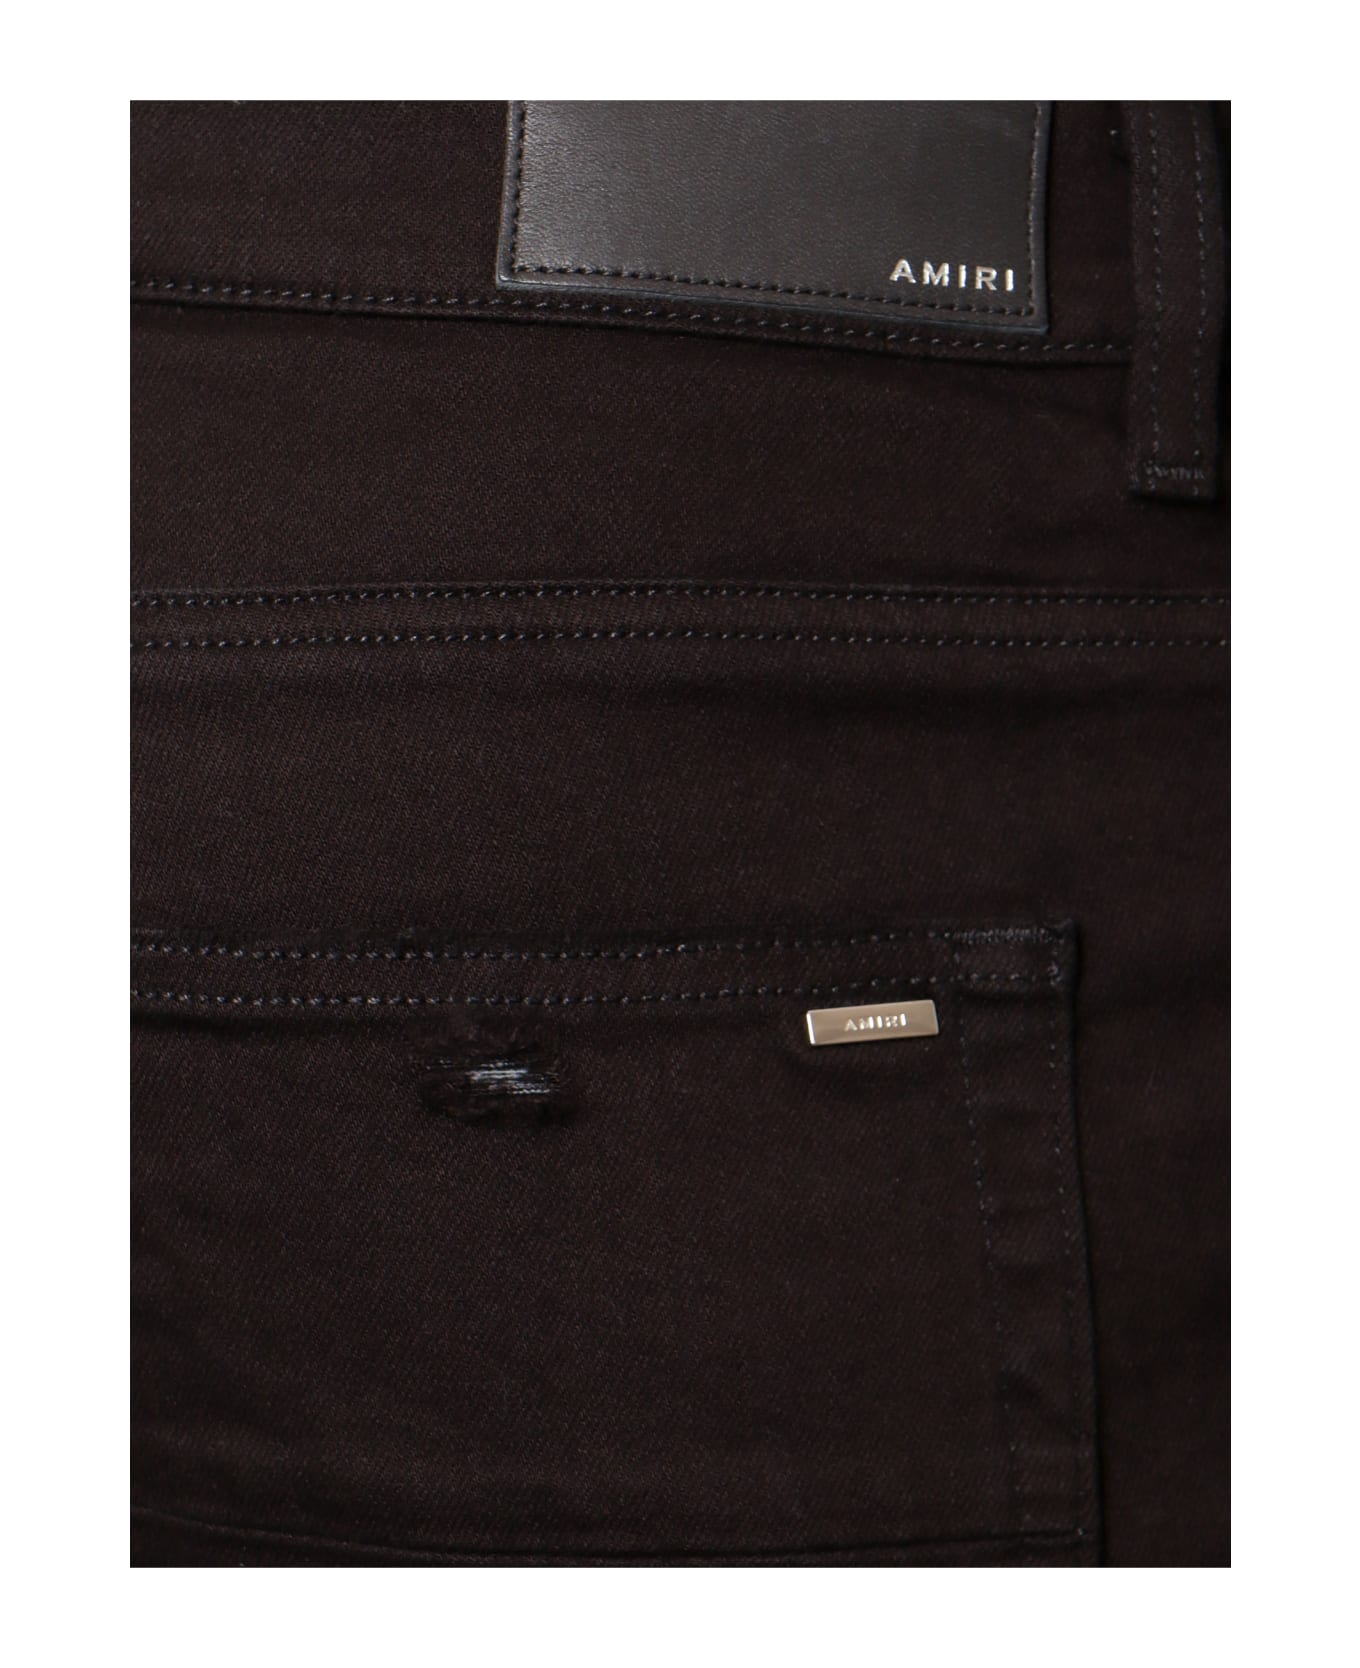 AMIRI Jeans - Black